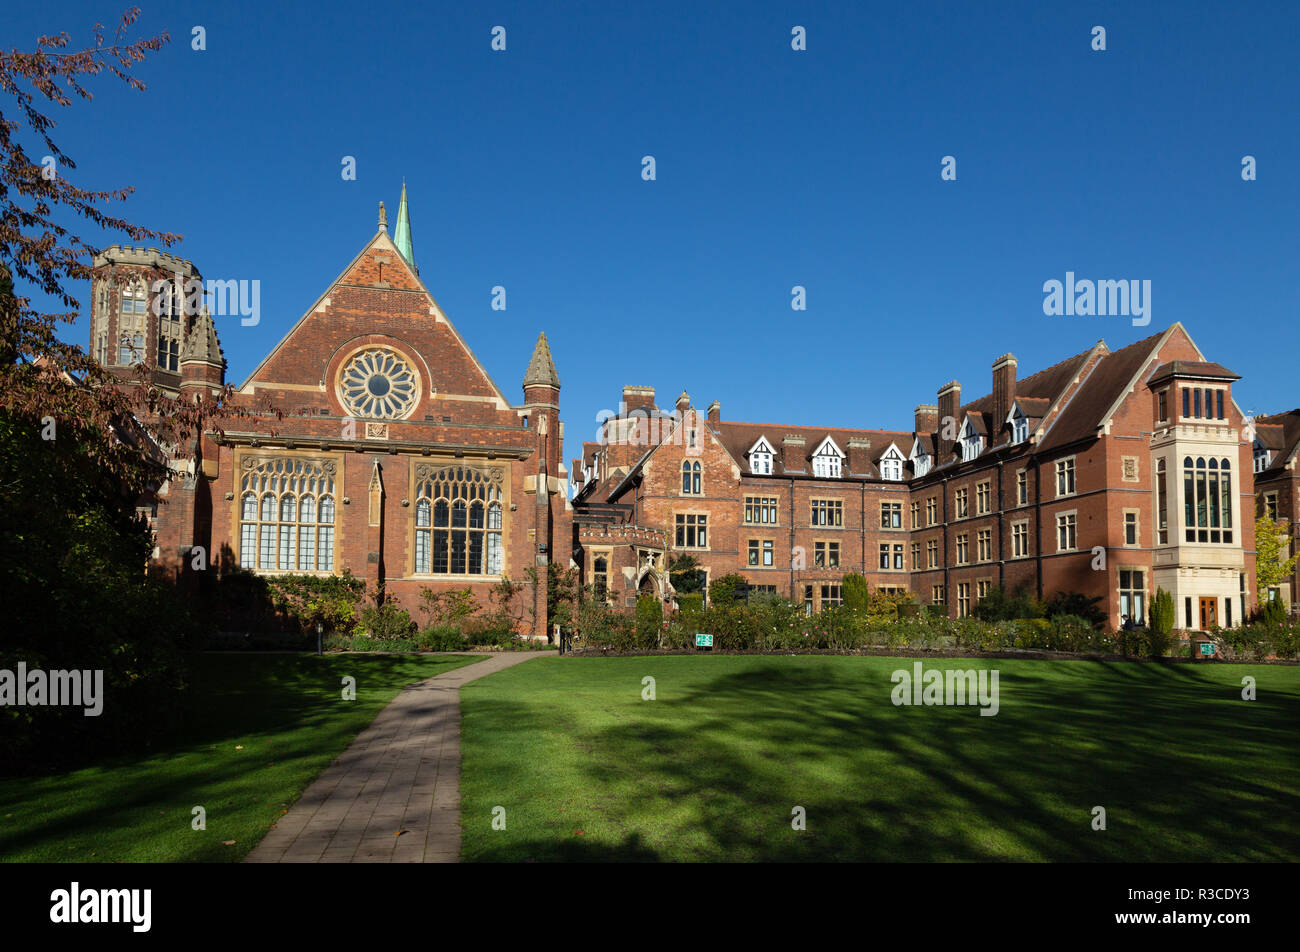 Homerton College, Cambridge University UK - exterior view of the older buildings Stock Photo